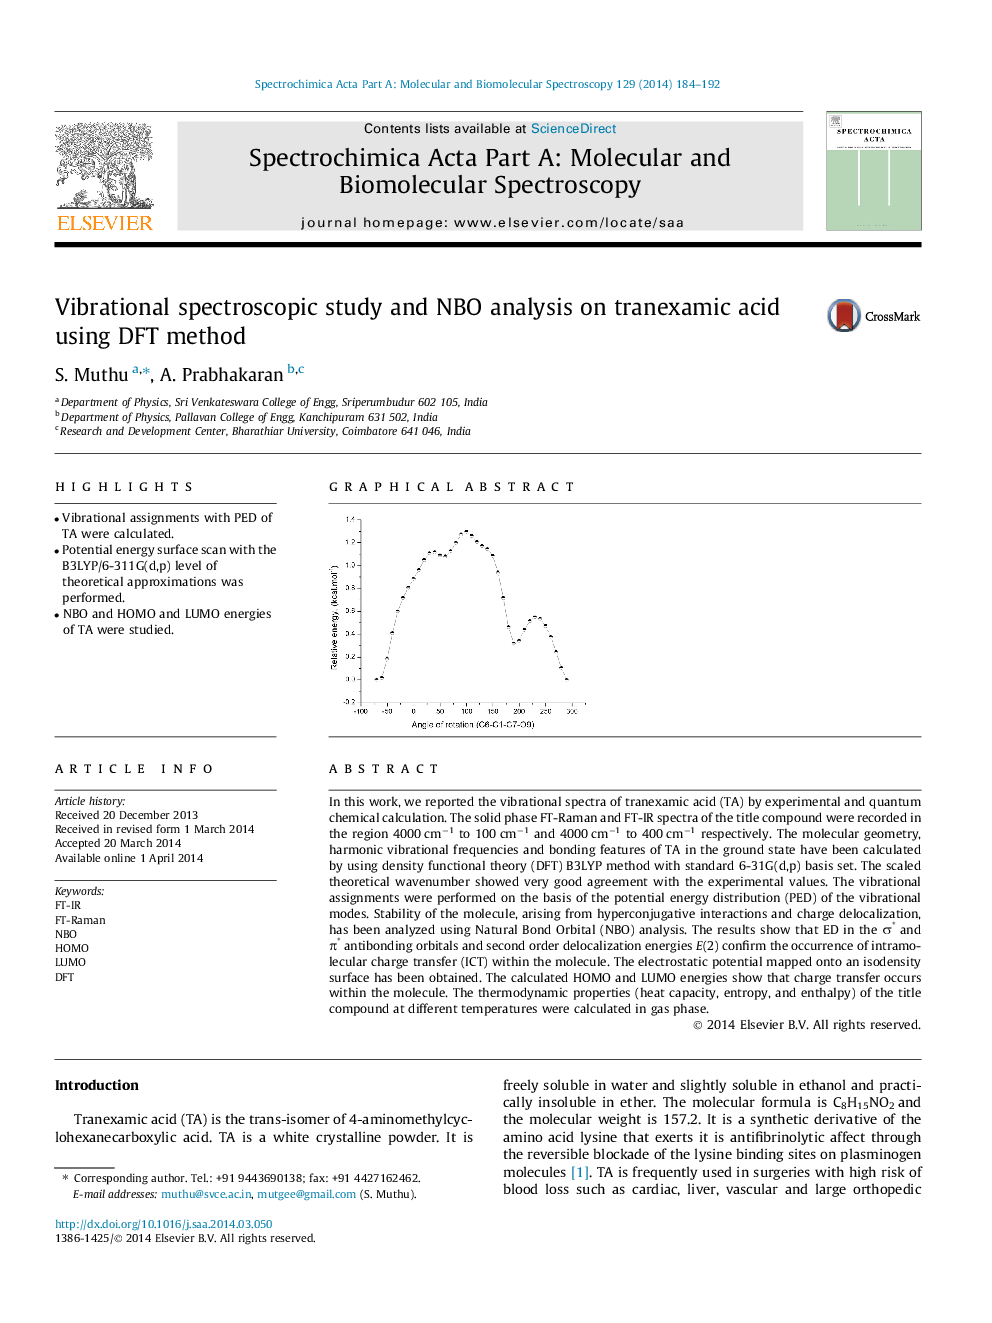 Vibrational spectroscopic study and NBO analysis on tranexamic acid using DFT method